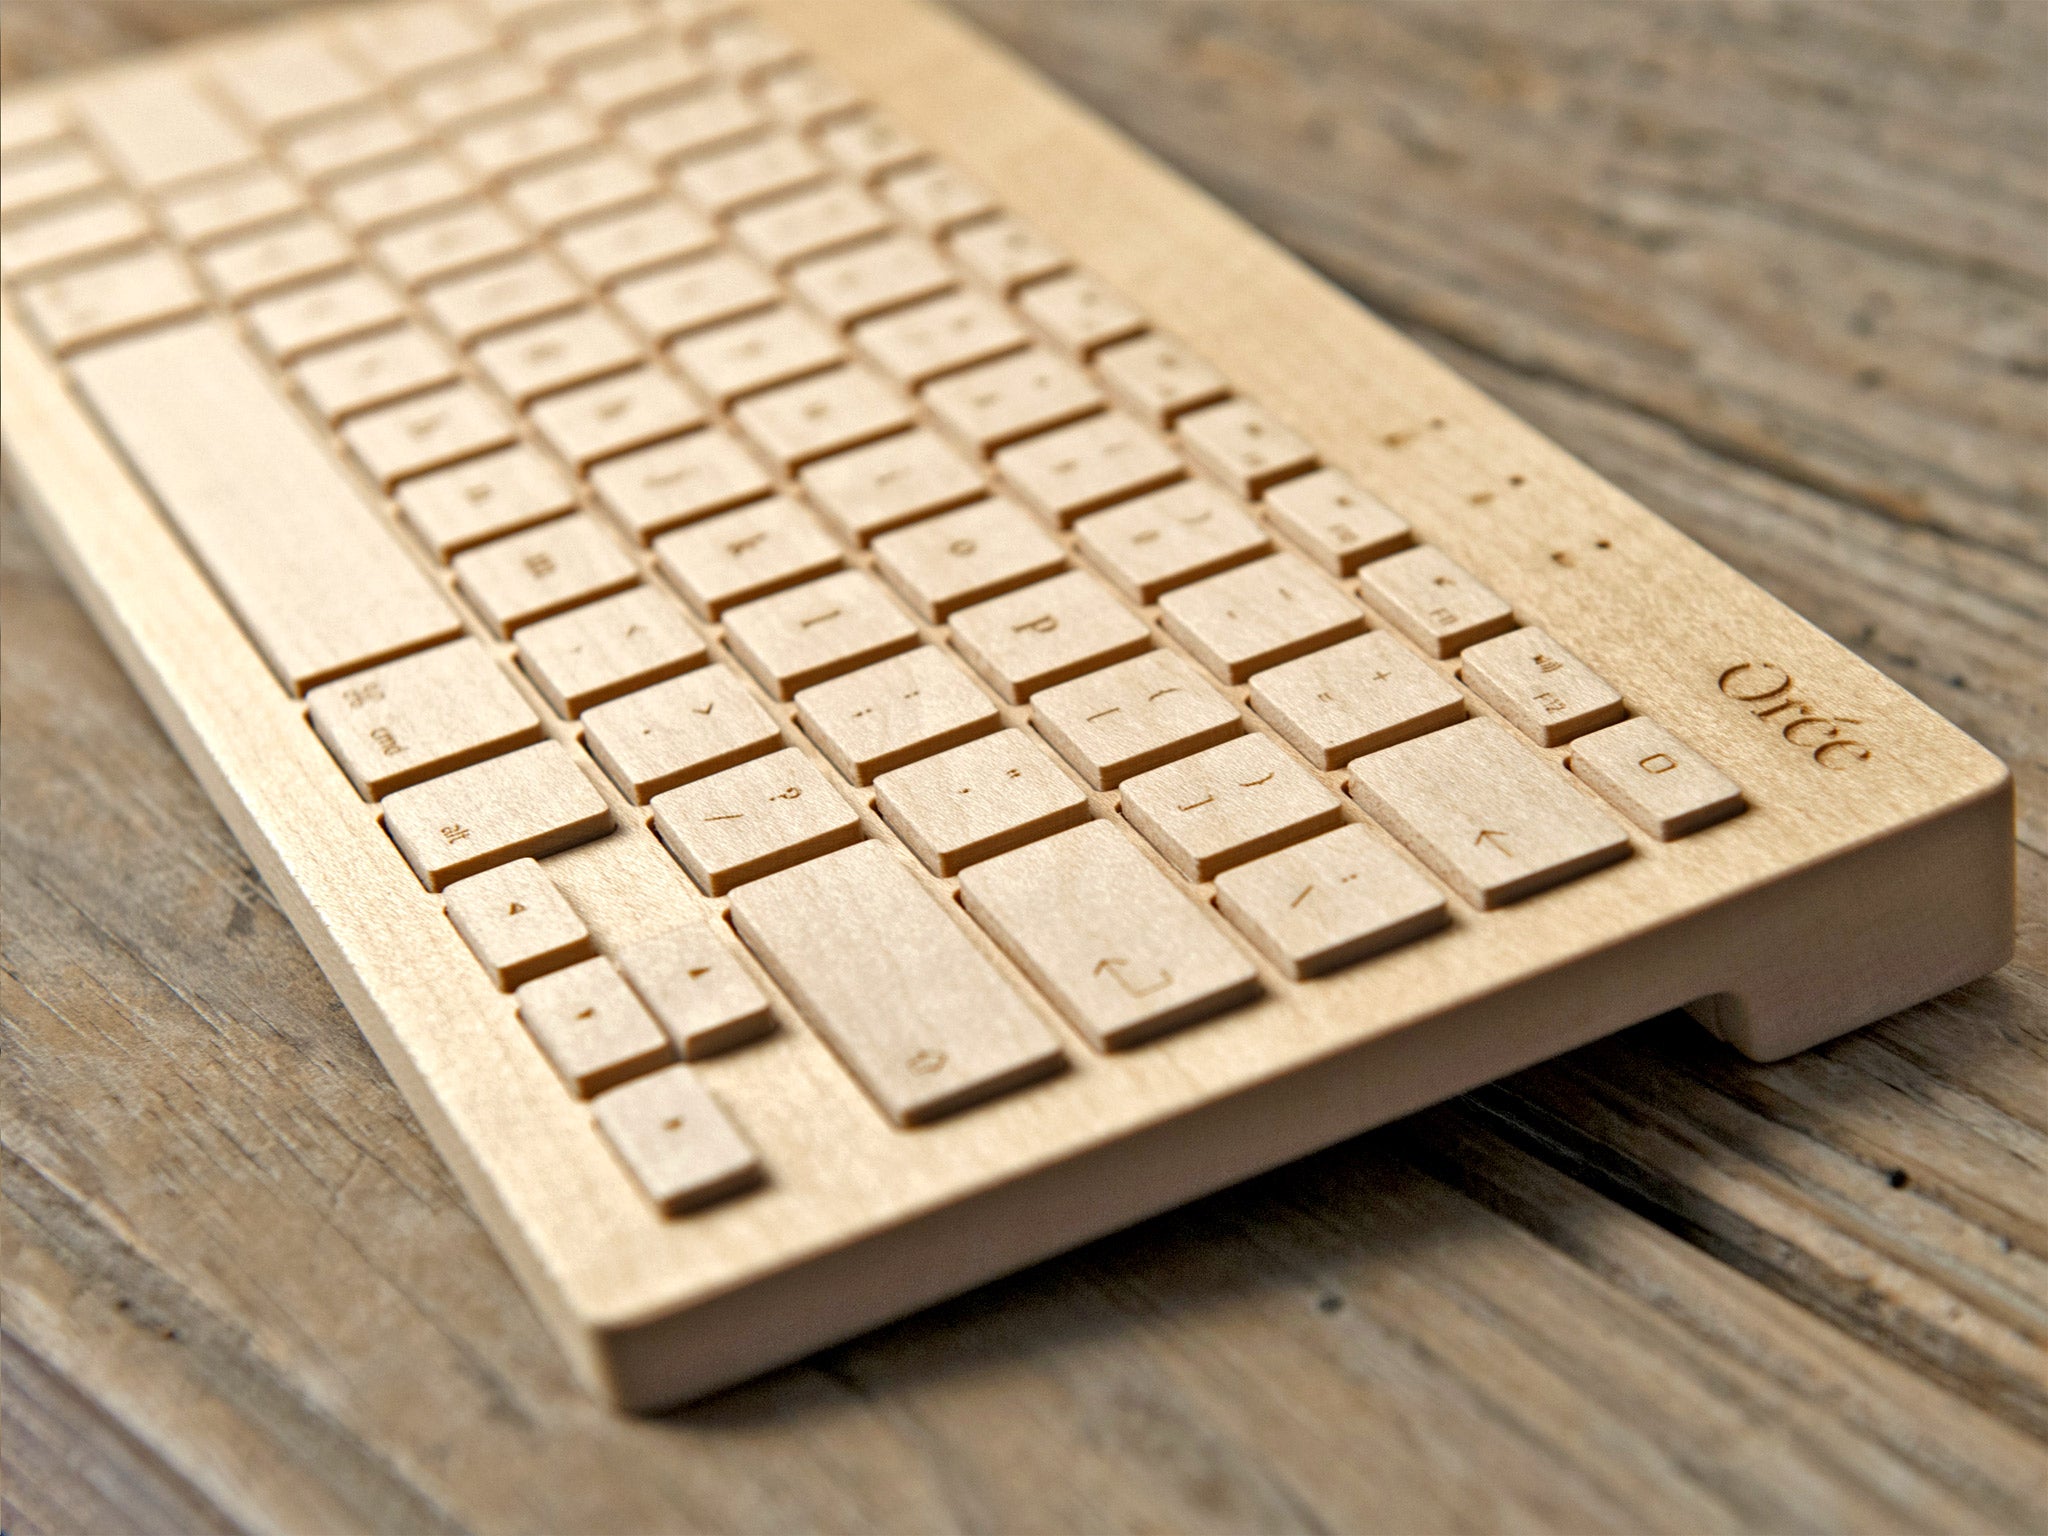 Sensational typing: the Orée wooden keyboard